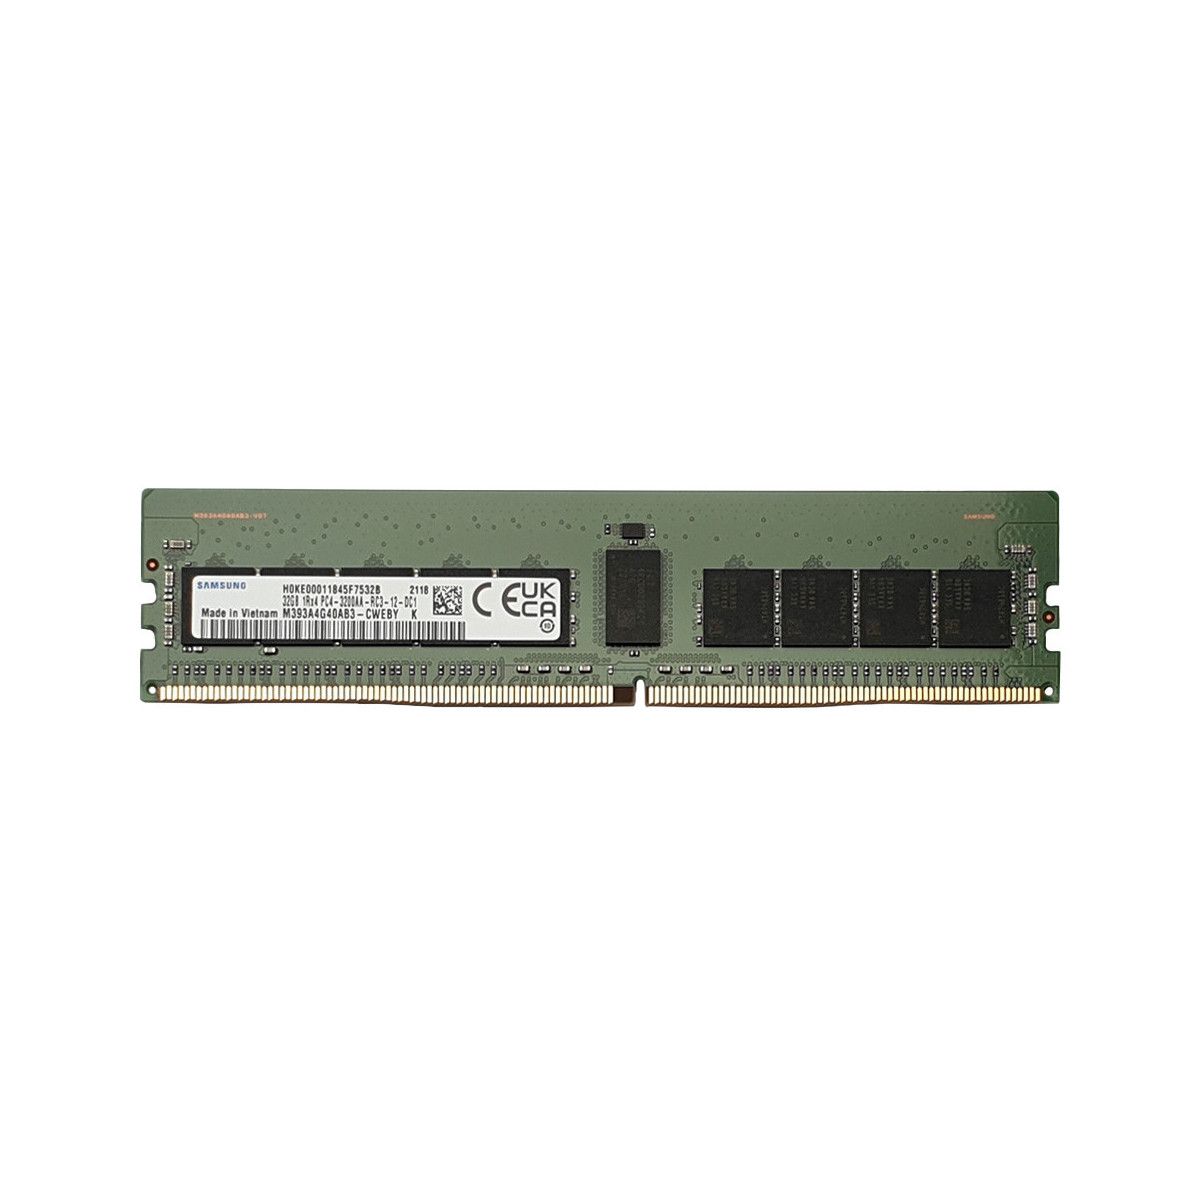 UCS-MR-X32G1RW-MS - Memstar 1x 32GB DDR4-3200 RDIMM PC4-25600R - Mem-Star Kompatibel OEM Speichermedien 1 - Memstar 